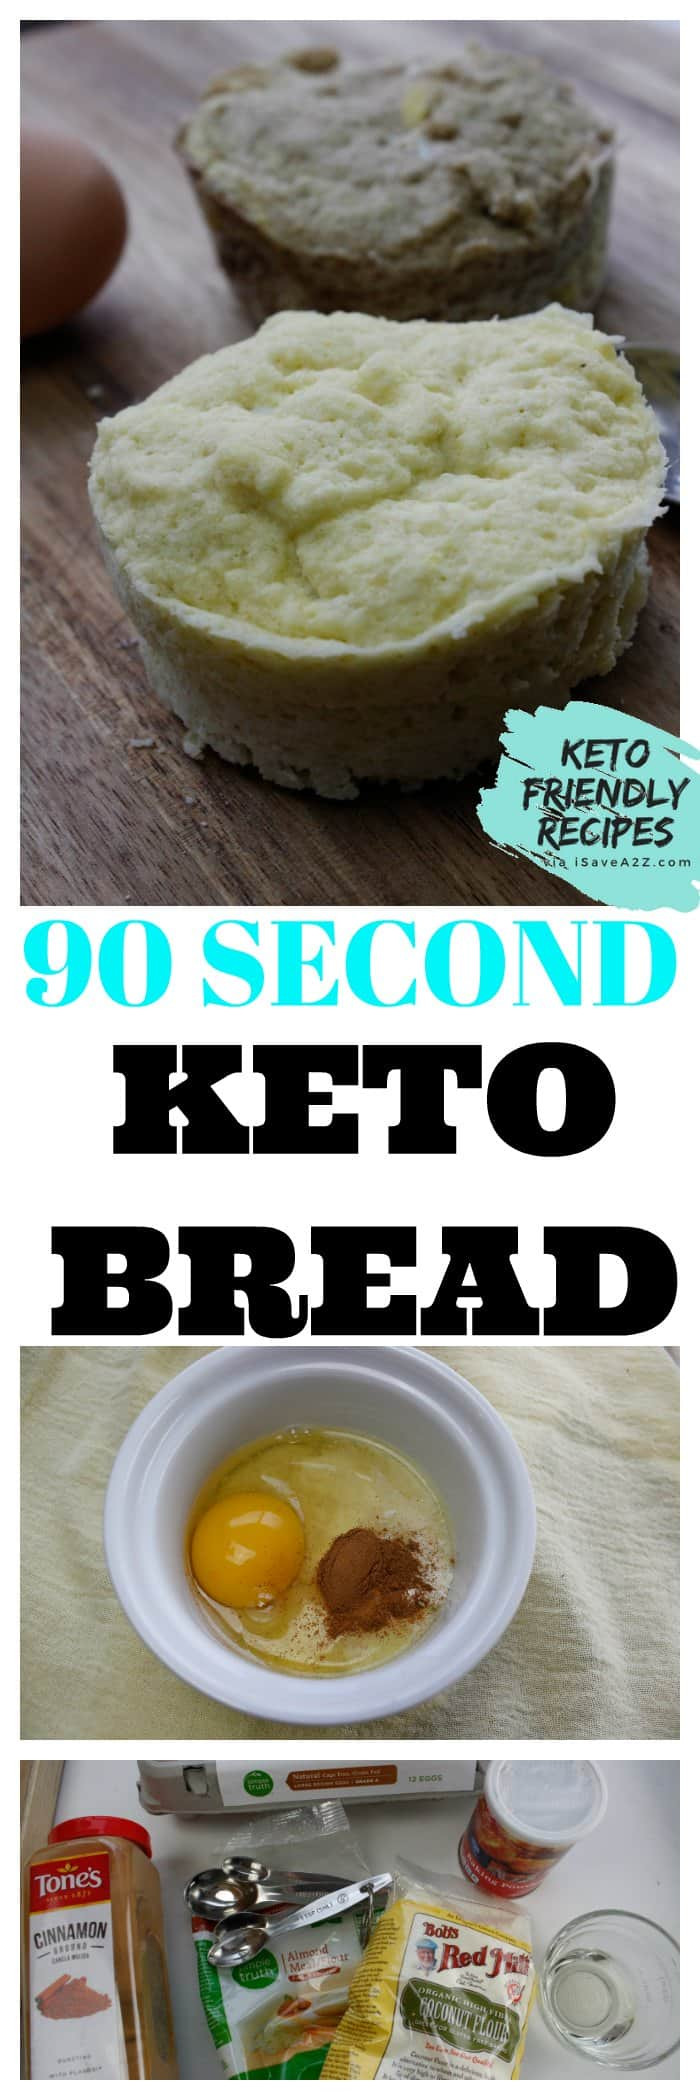 3 Ingredient 90 Second Keto Bread
 DELICIOUS Keto 90 Second Bread Recipe iSaveA2Z